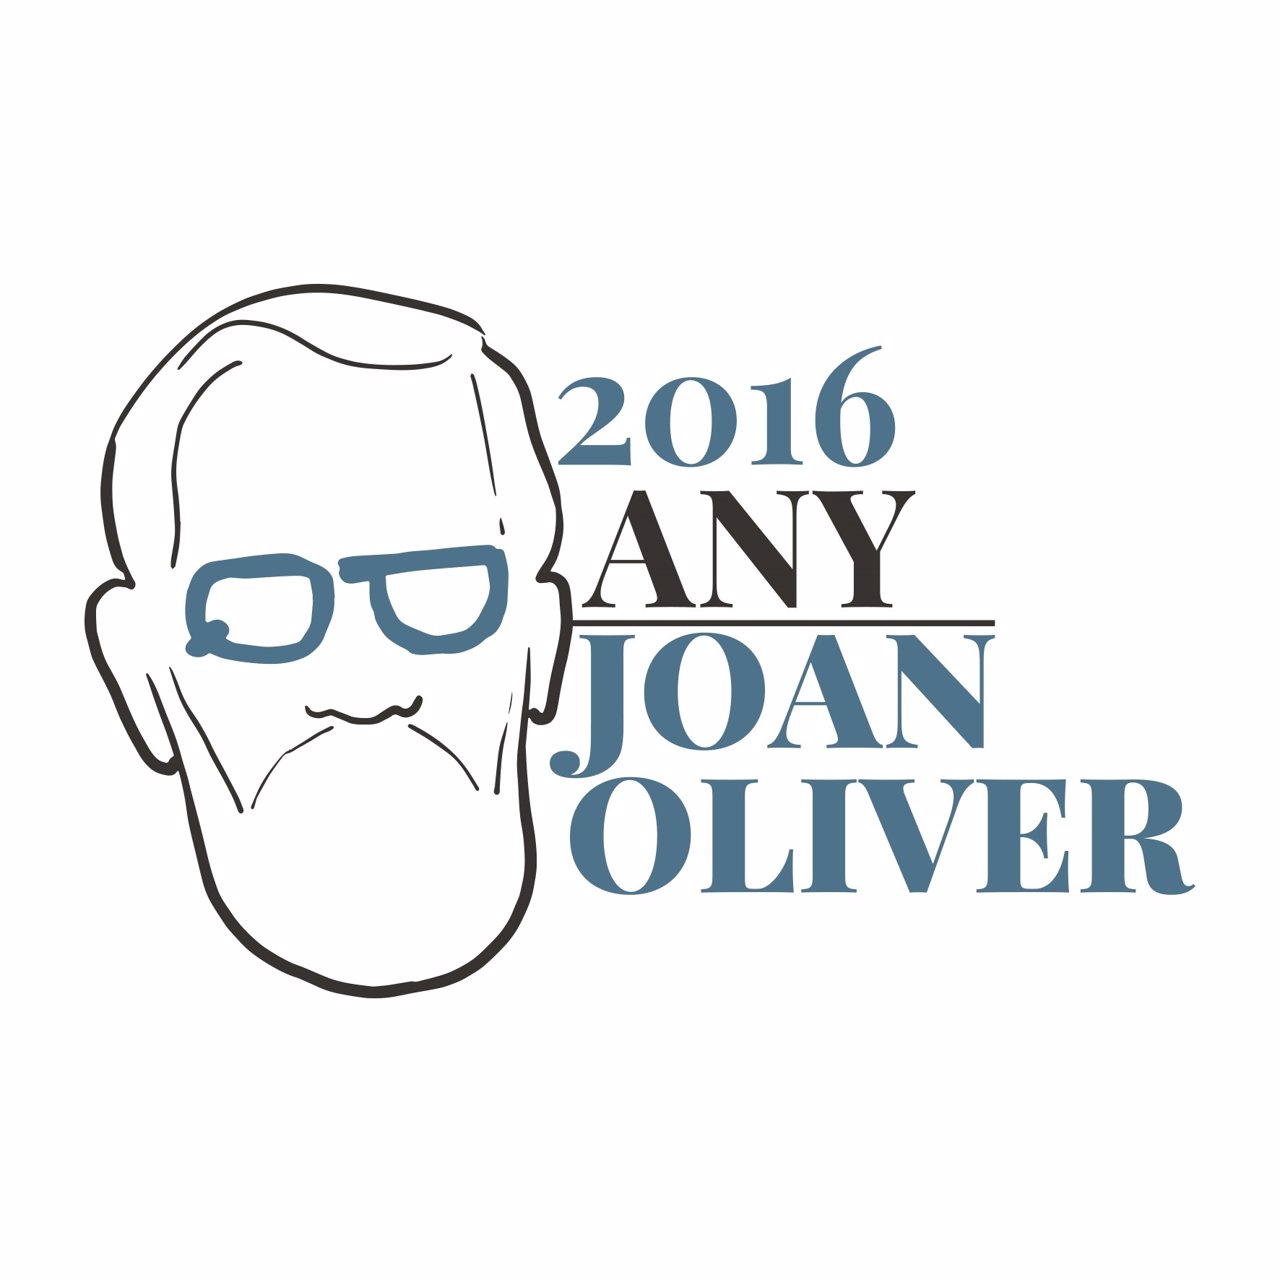 Cartel promocional del Año Joan Oliver 